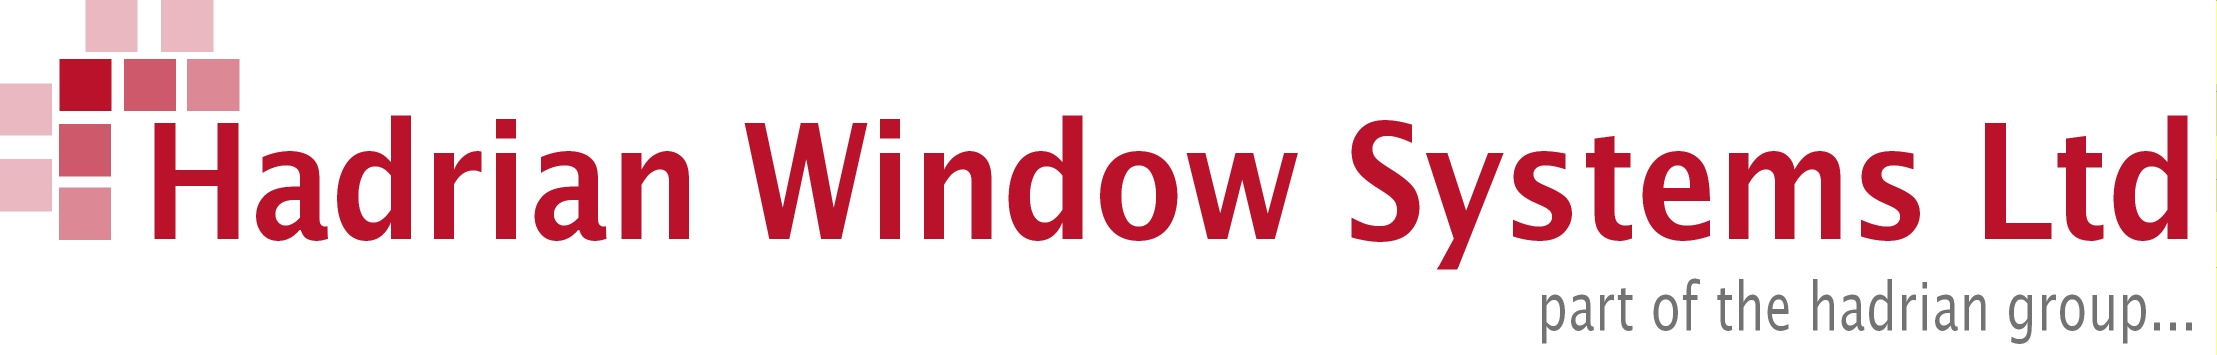 Hadrian Window Systems Ltd